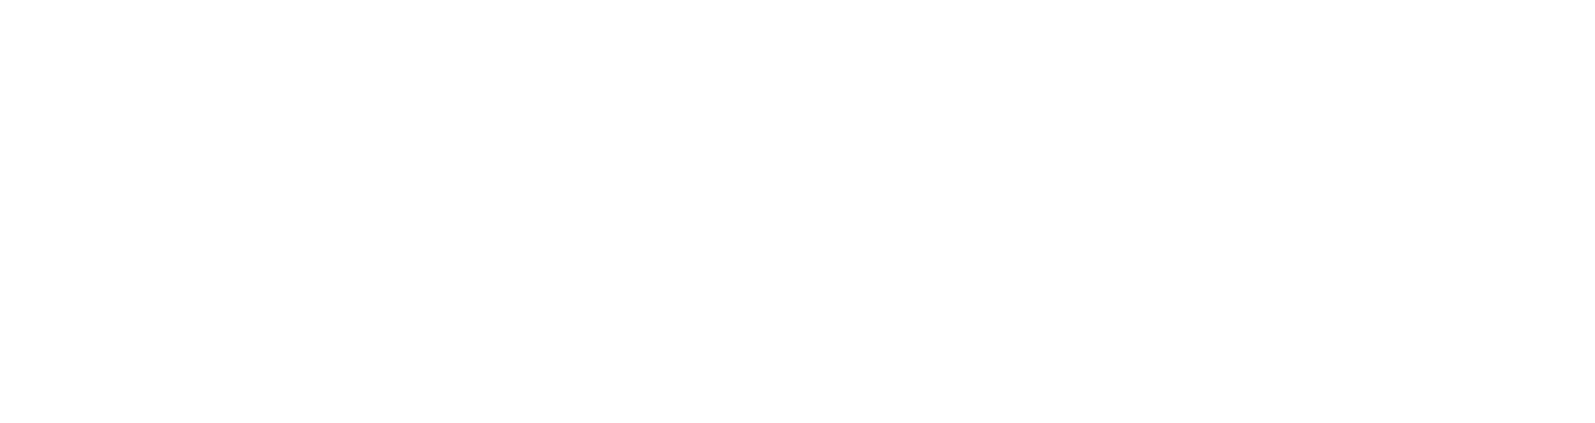 Intact Financial logo large for dark backgrounds (transparent PNG)